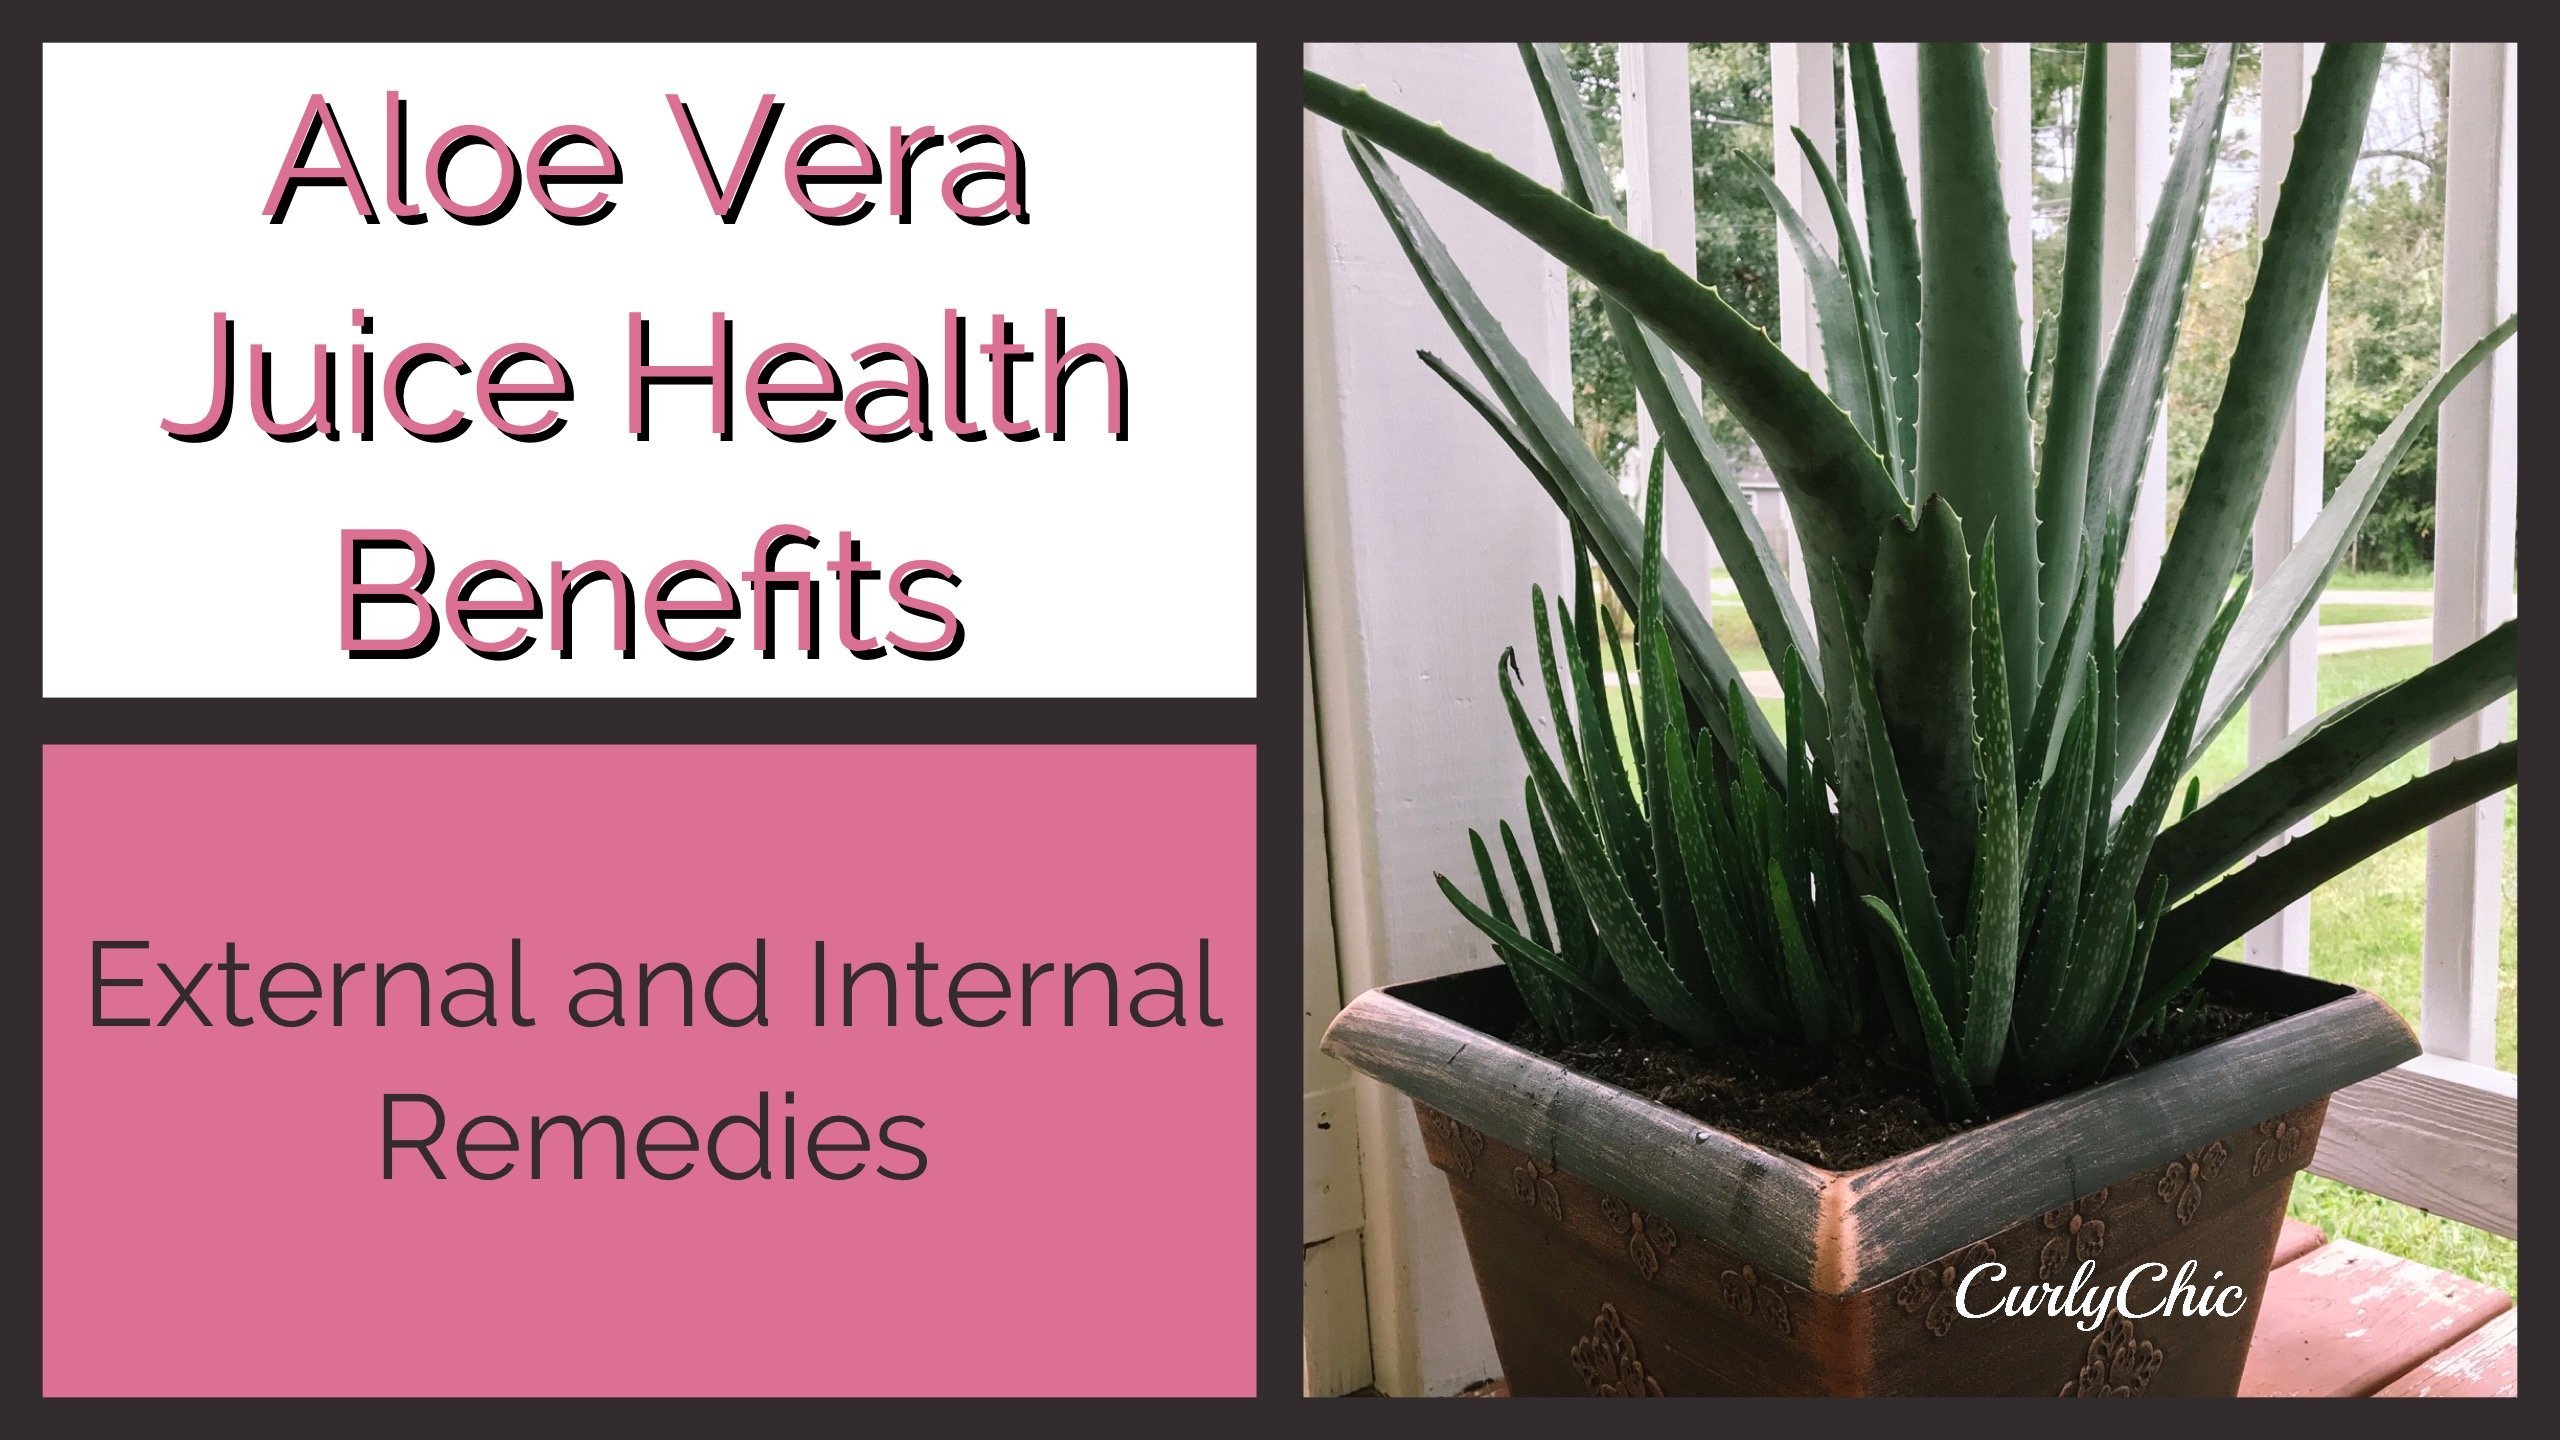 Aloe vera juice health benefits